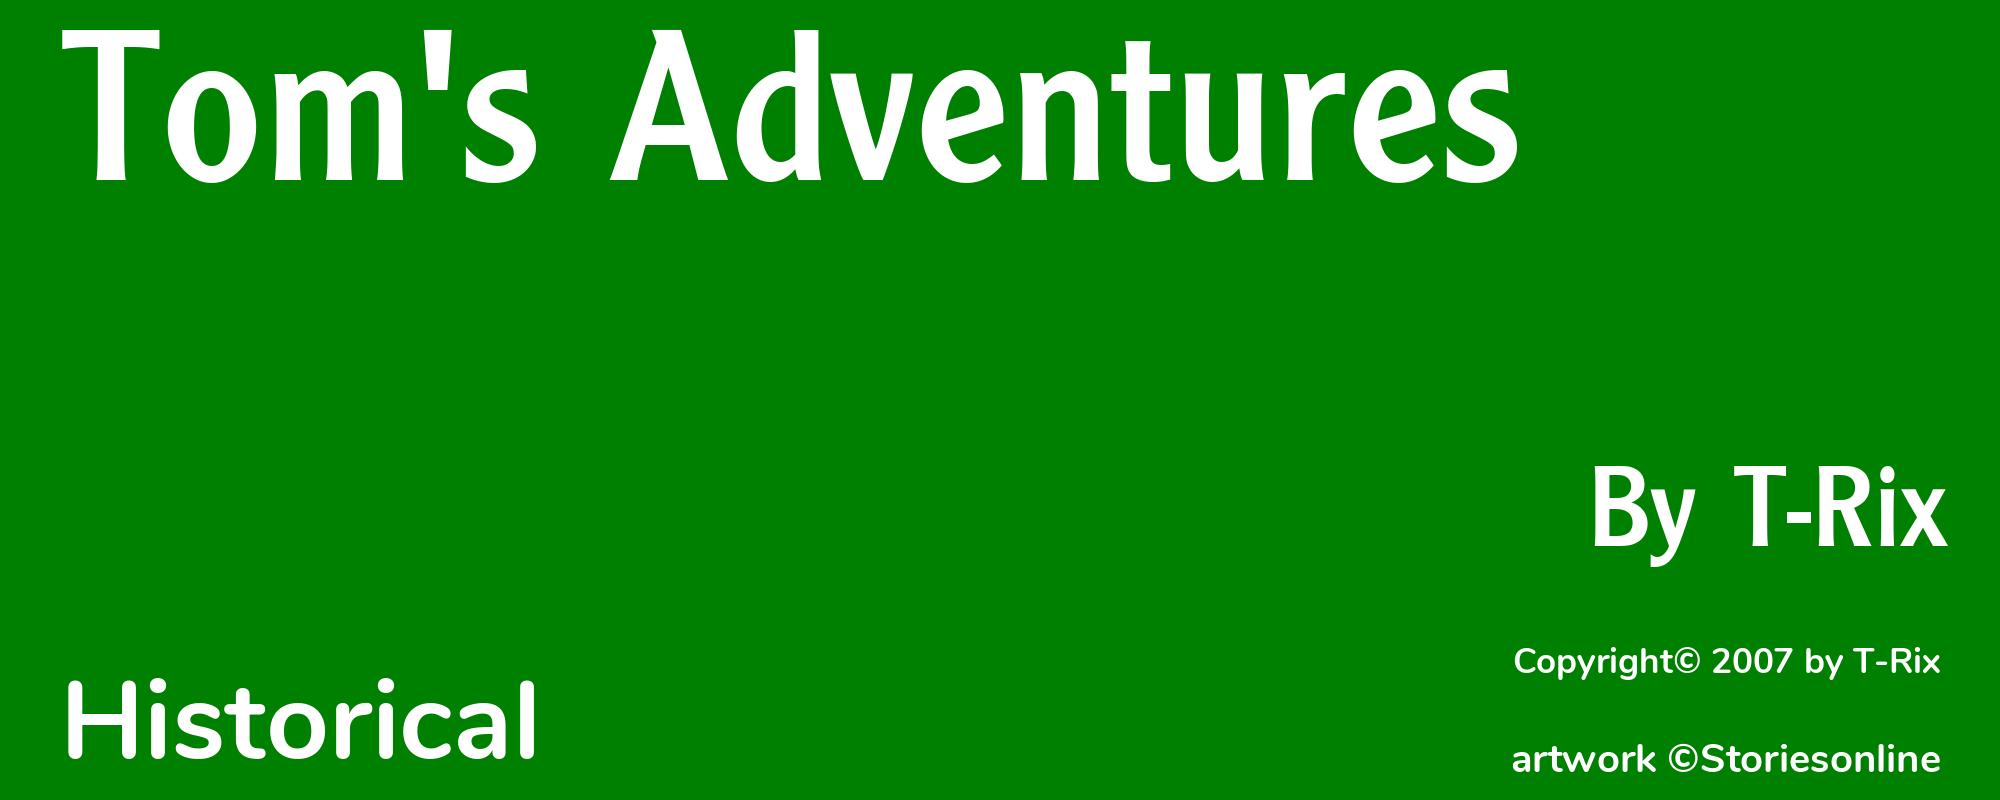 Tom's Adventures - Cover